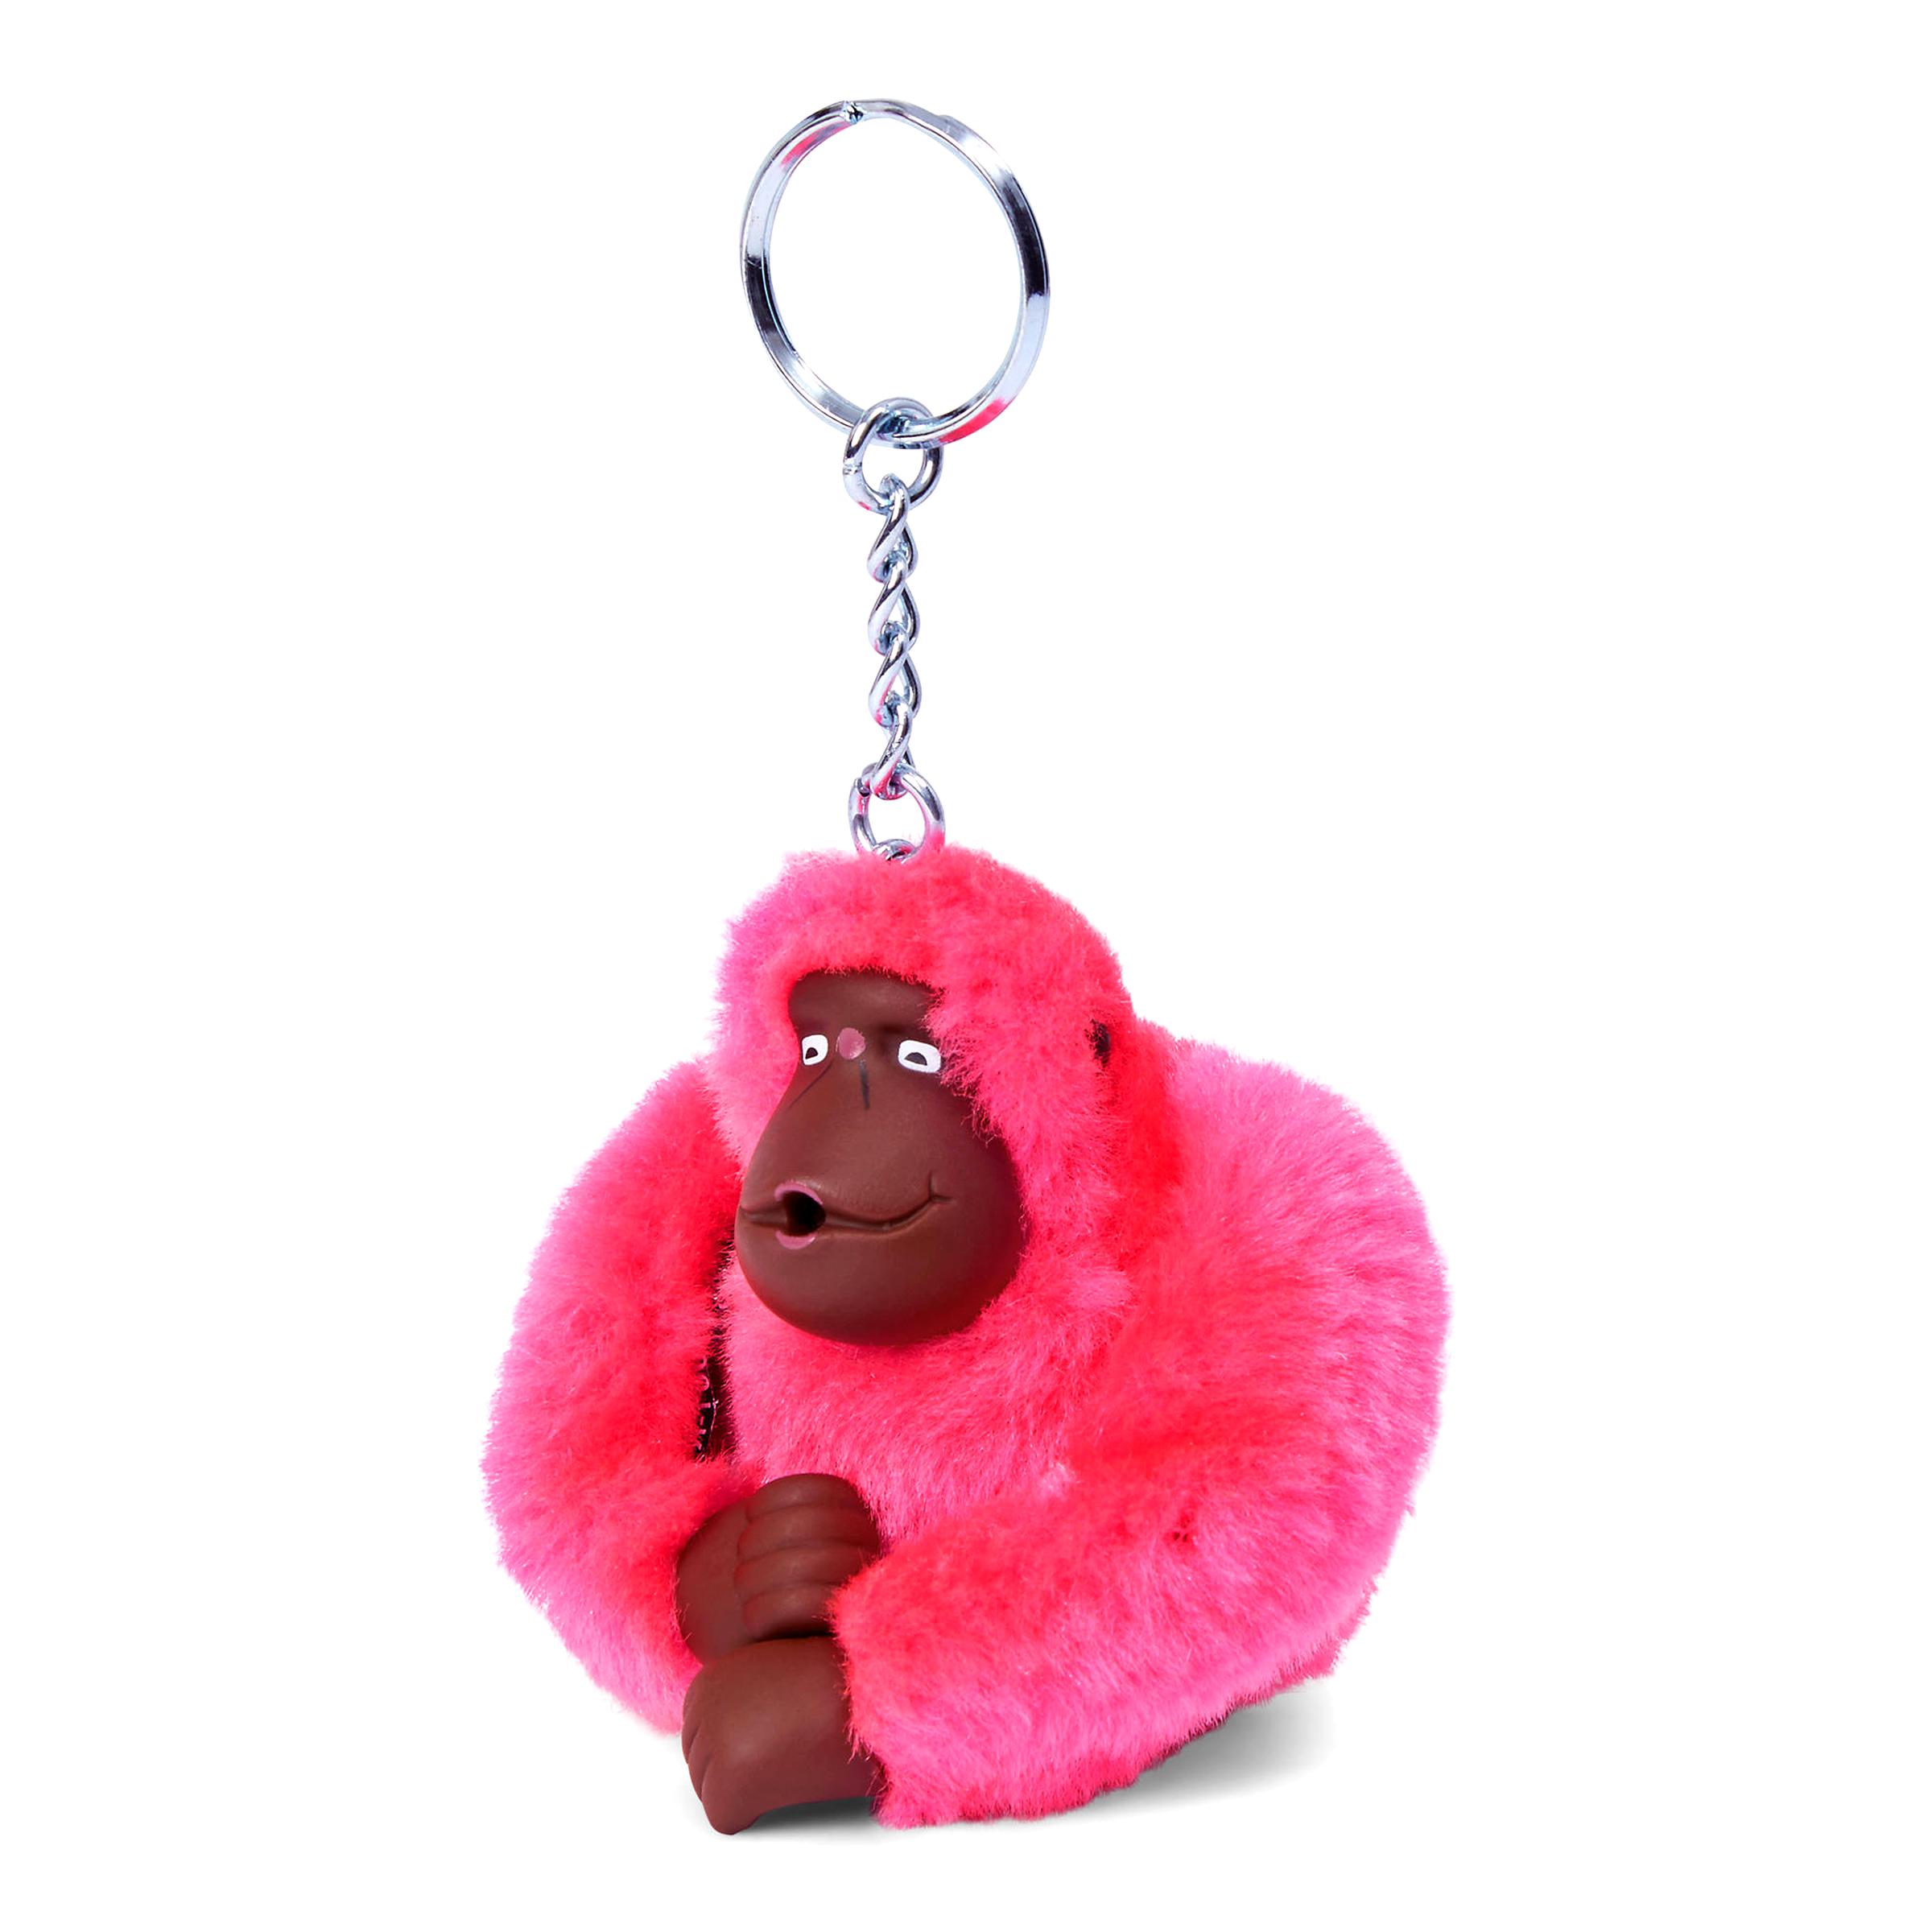 Pink Kipling Monkey for sale in UK | 63 used Pink Kipling Monkeys